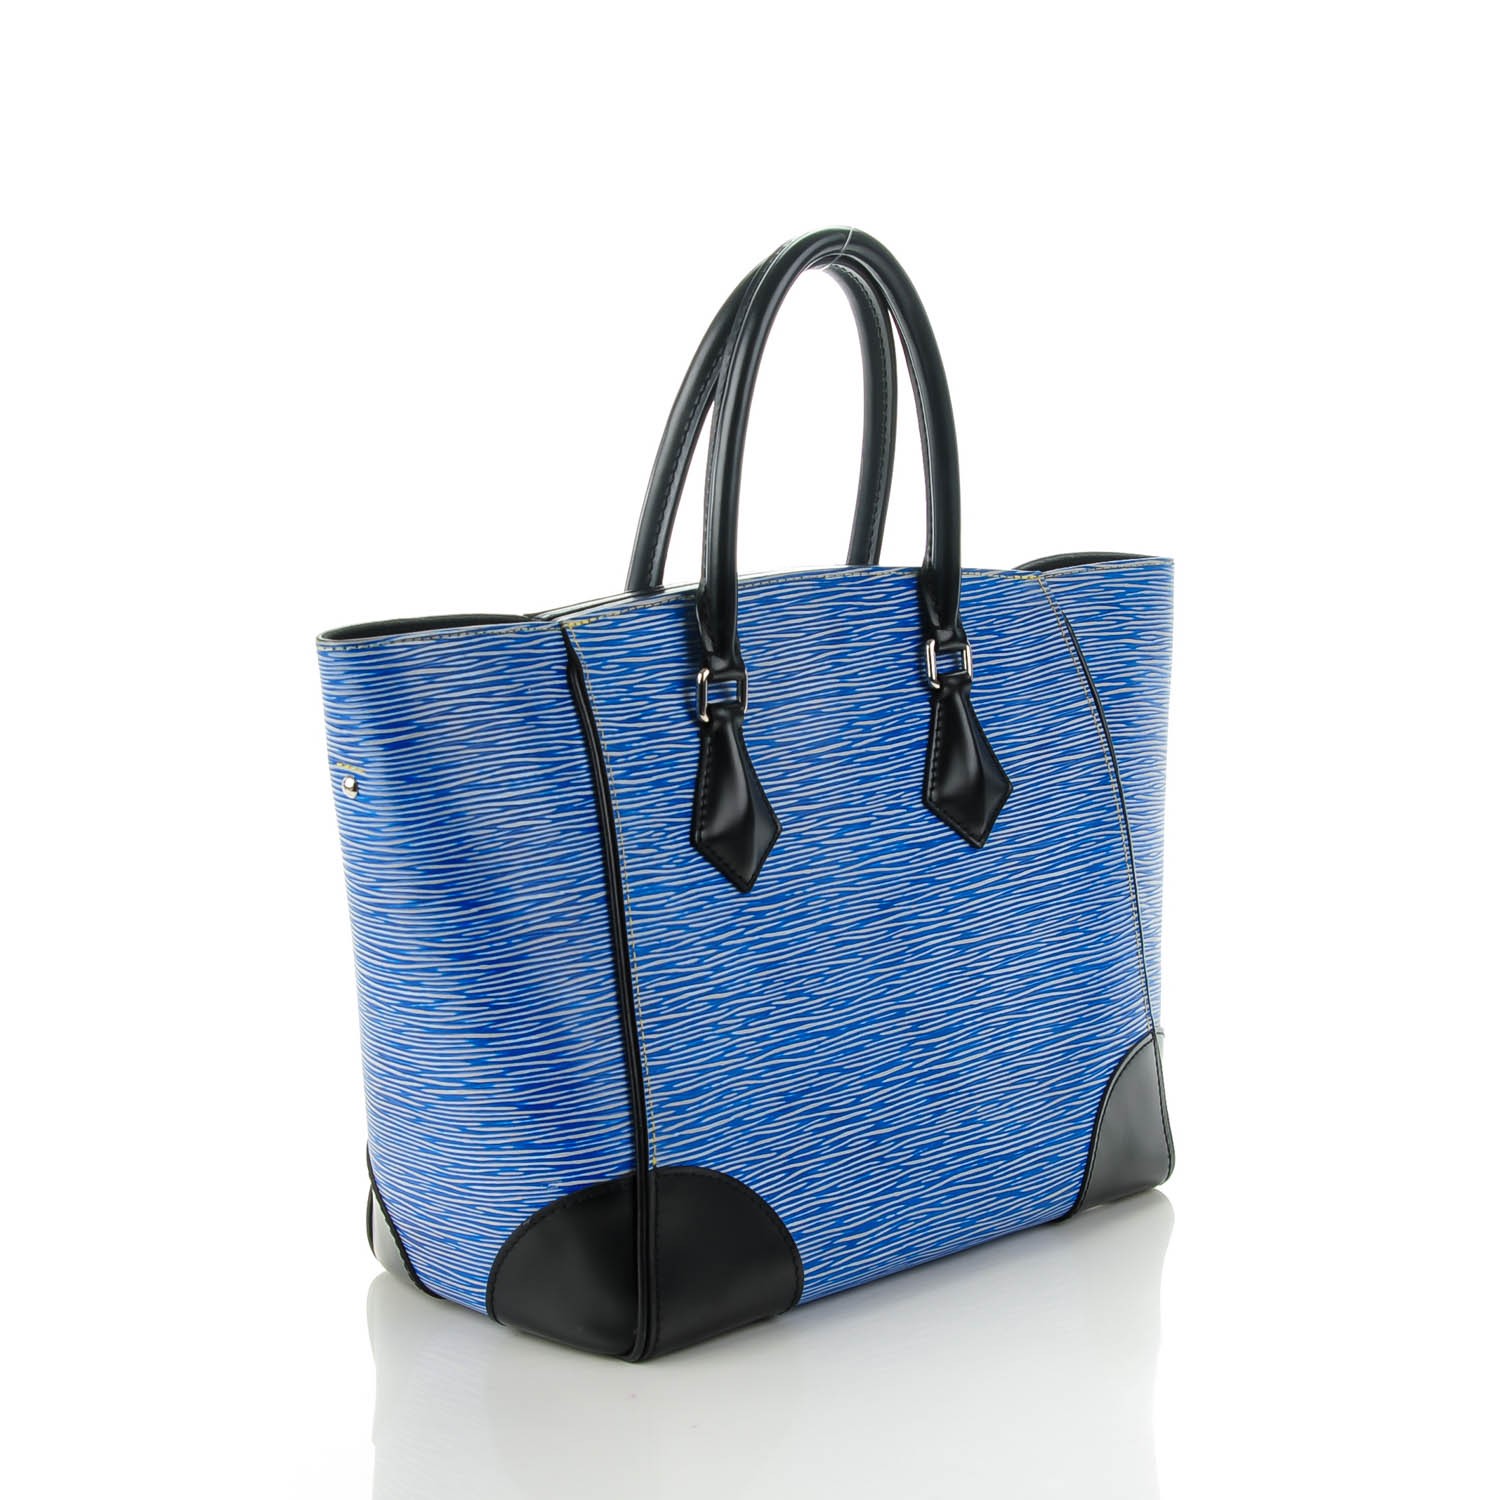 Louis Vuitton Phenix PM Epi Leather Bag